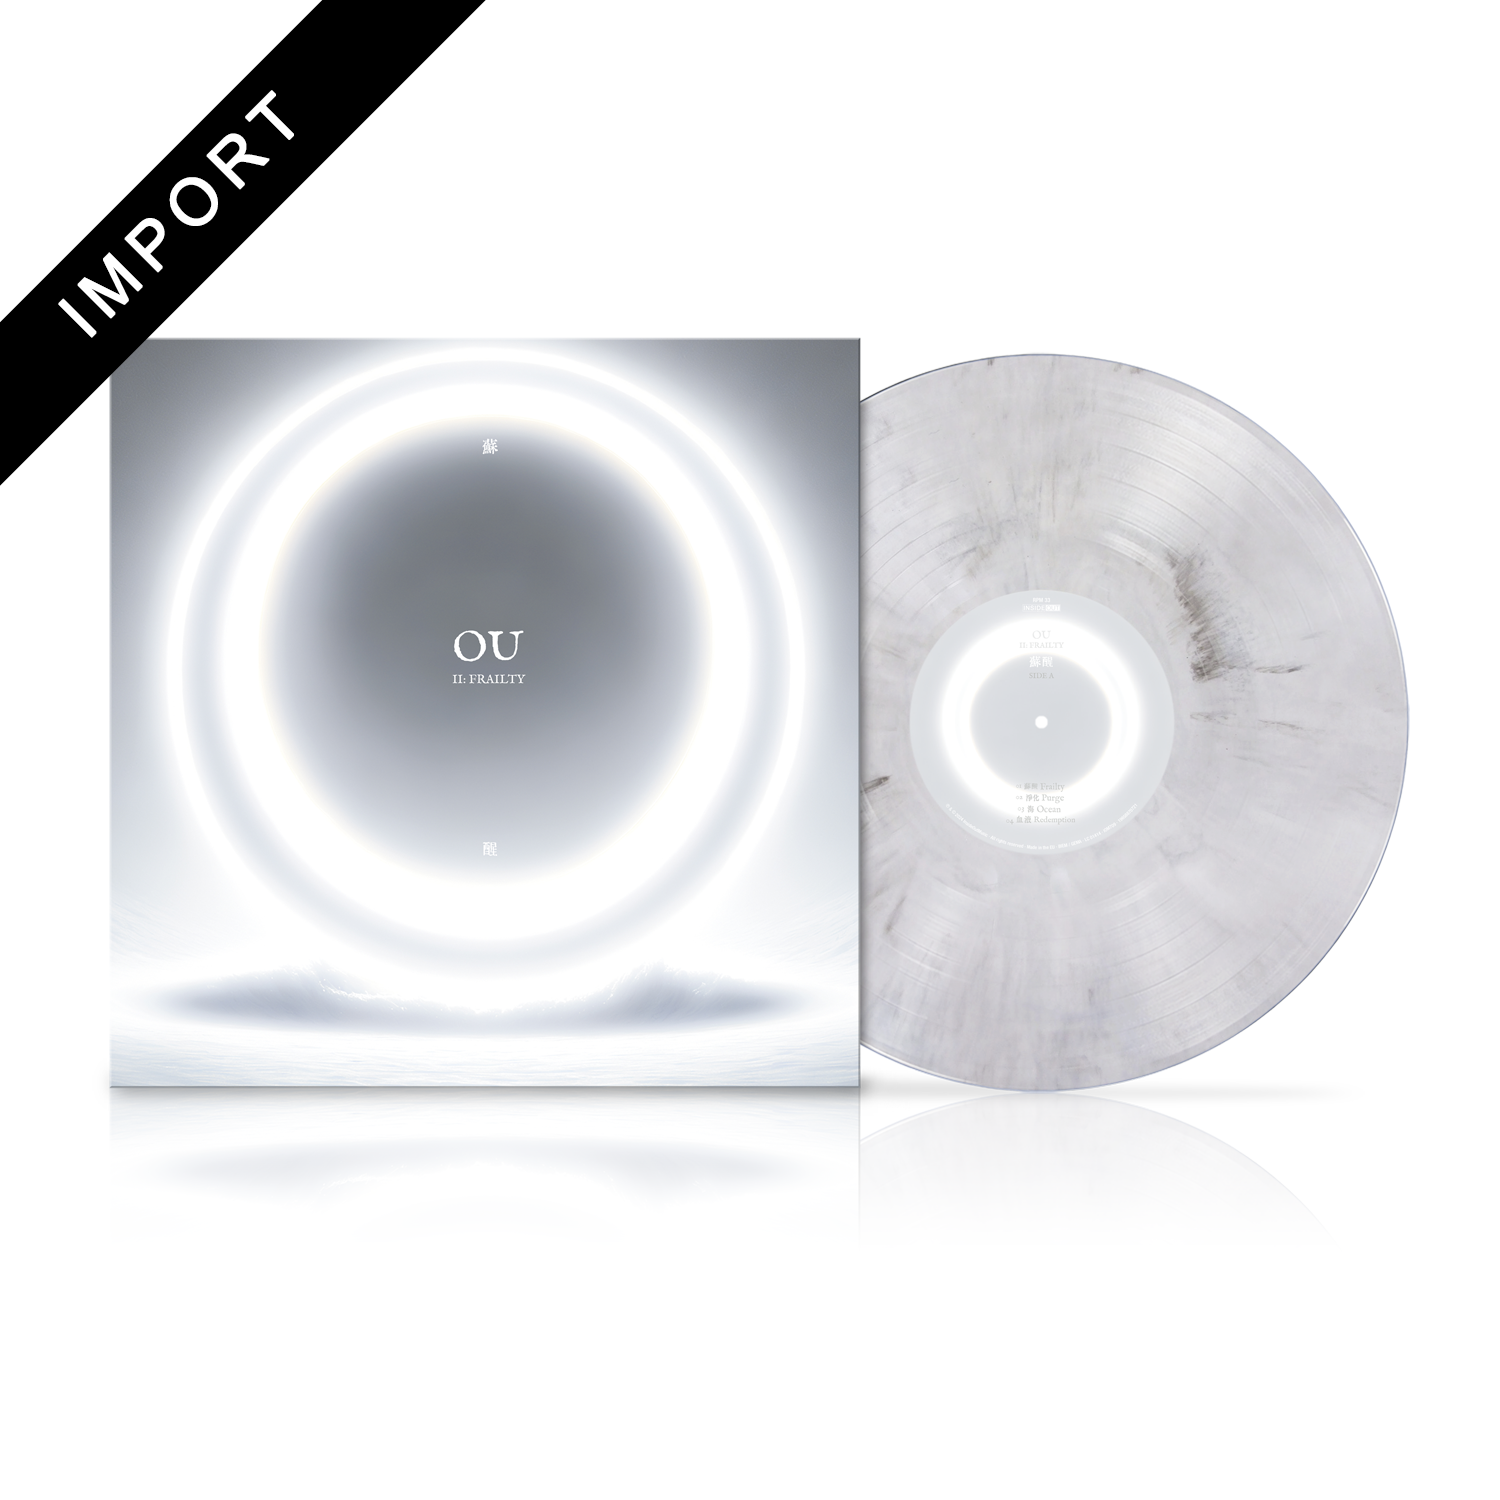 OU - II: Fragile - White-Black Marbled Vinyl LP